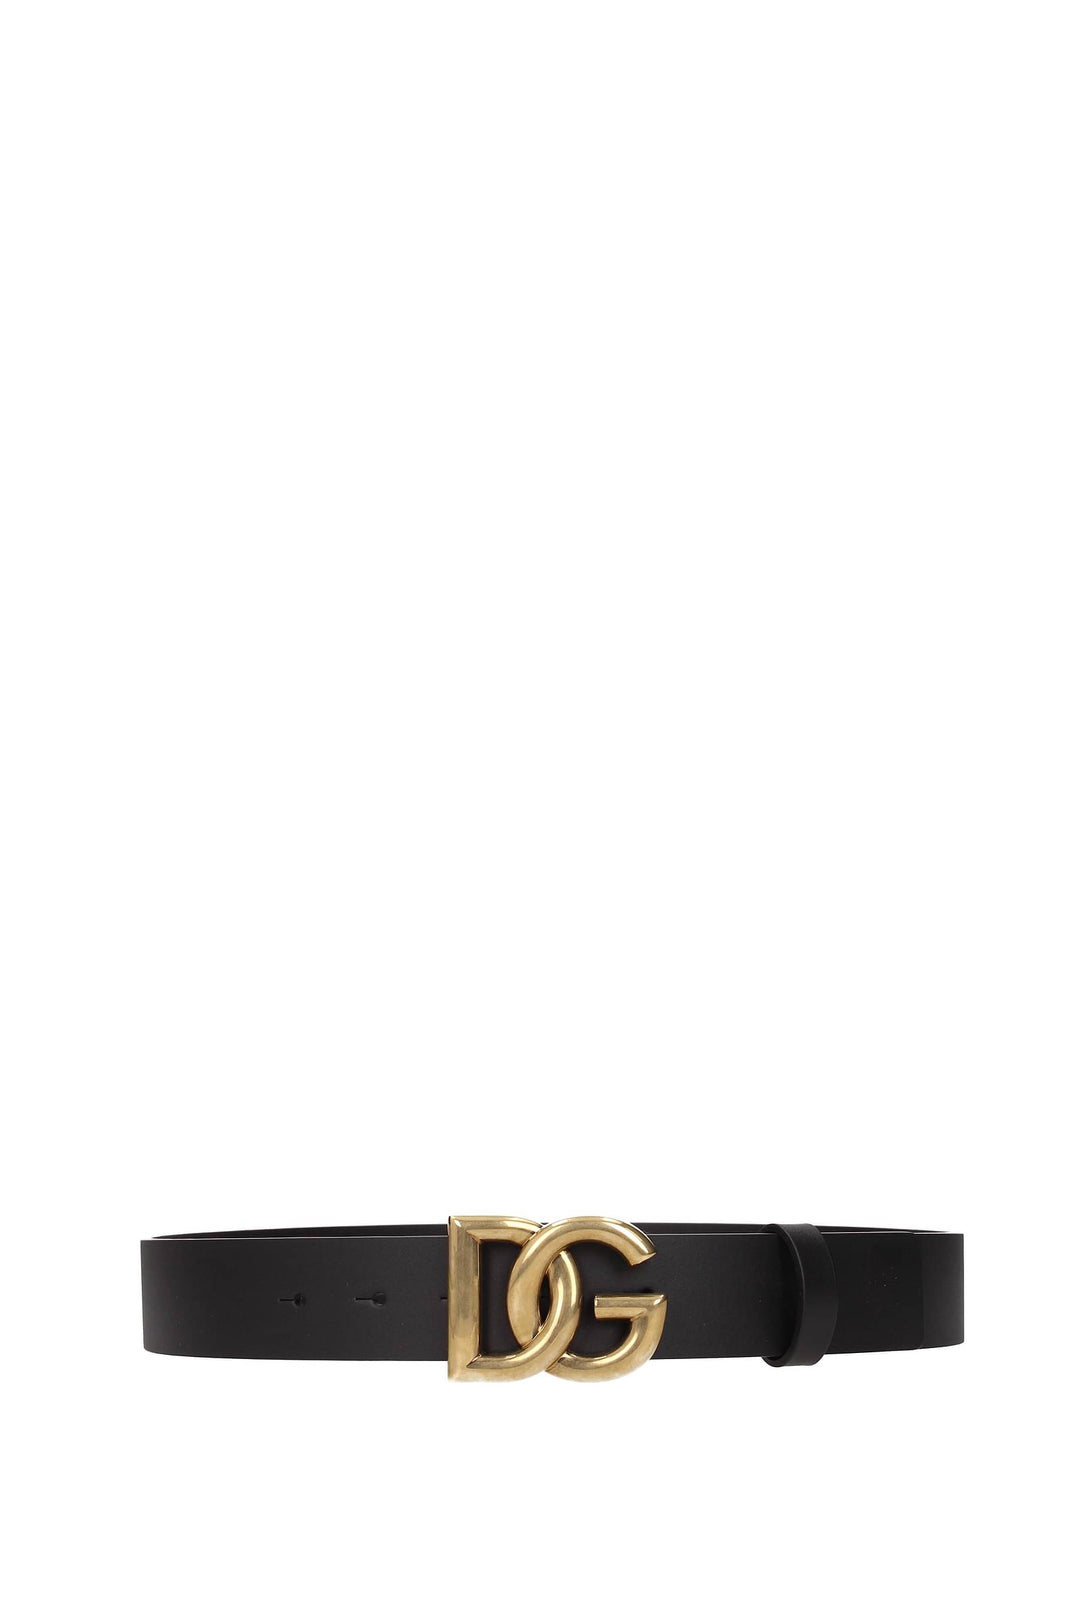 Cinture Regular Pelle Nero Oro - Dolce&Gabbana - Uomo